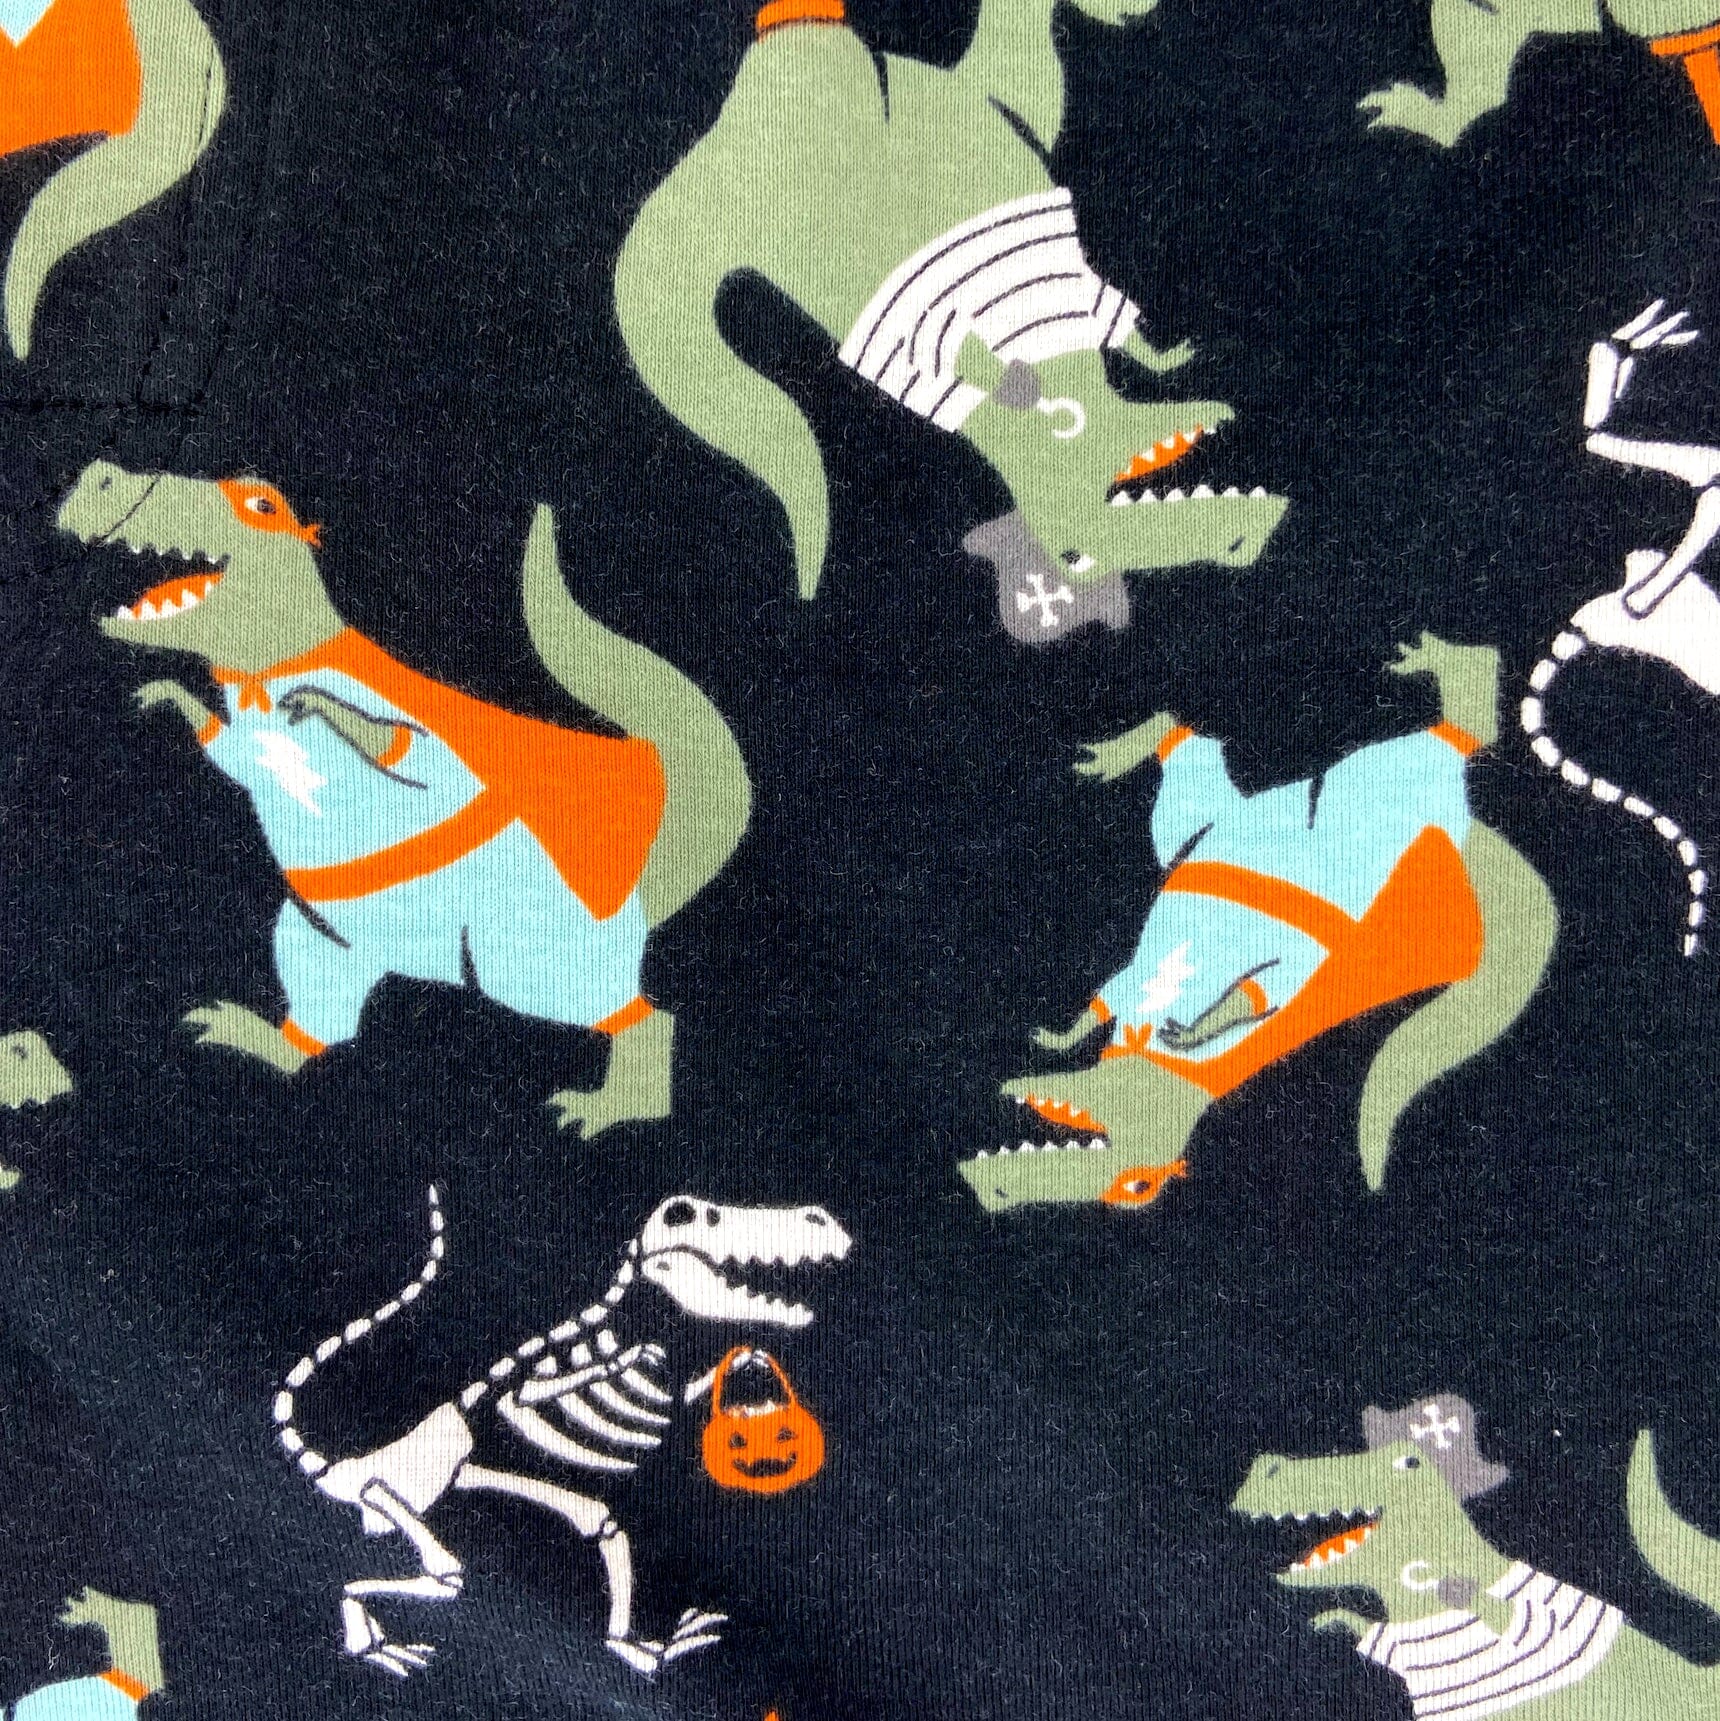 Men's Halloween Dinosaur Skeleton Cartoon Patterned Sleep PJs Shorts